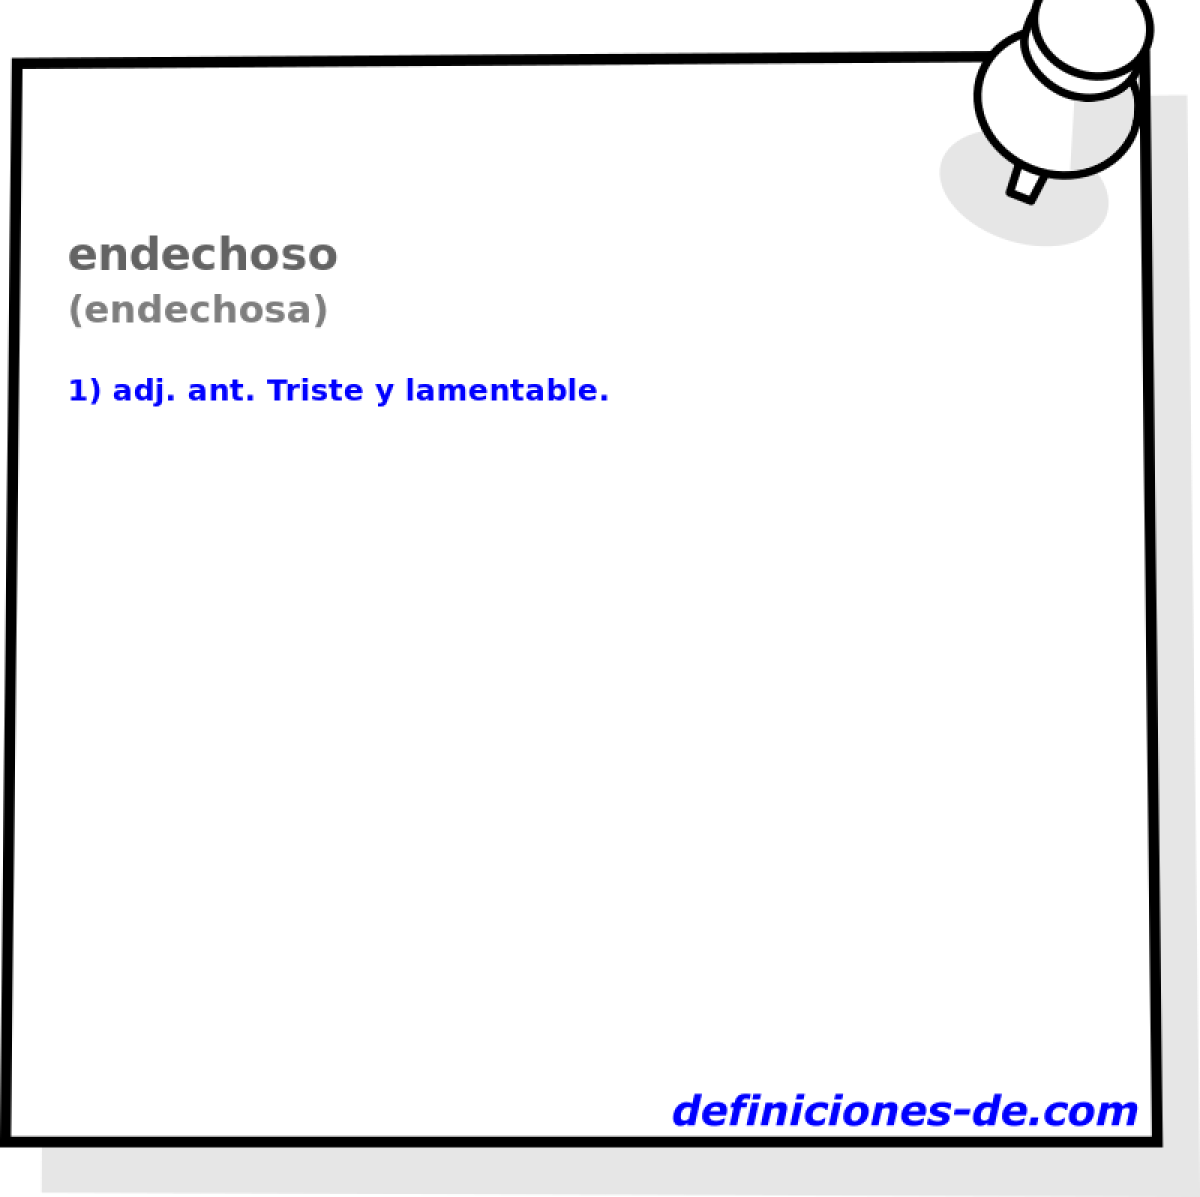 endechoso (endechosa)